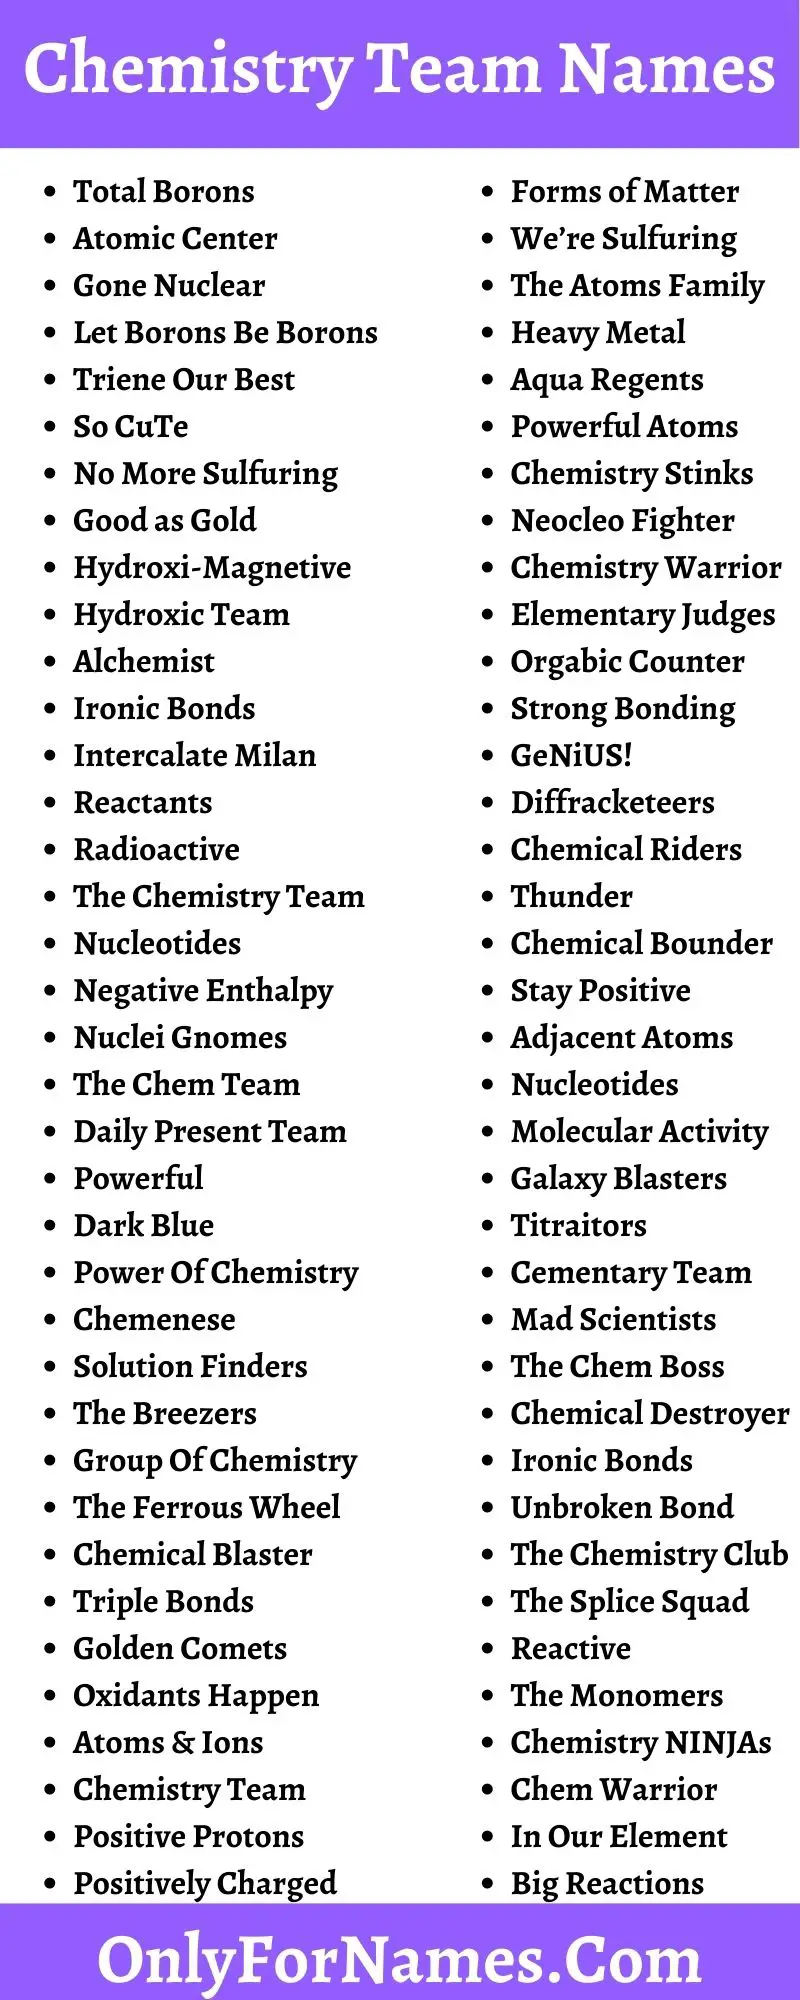 Chemistry Team Names